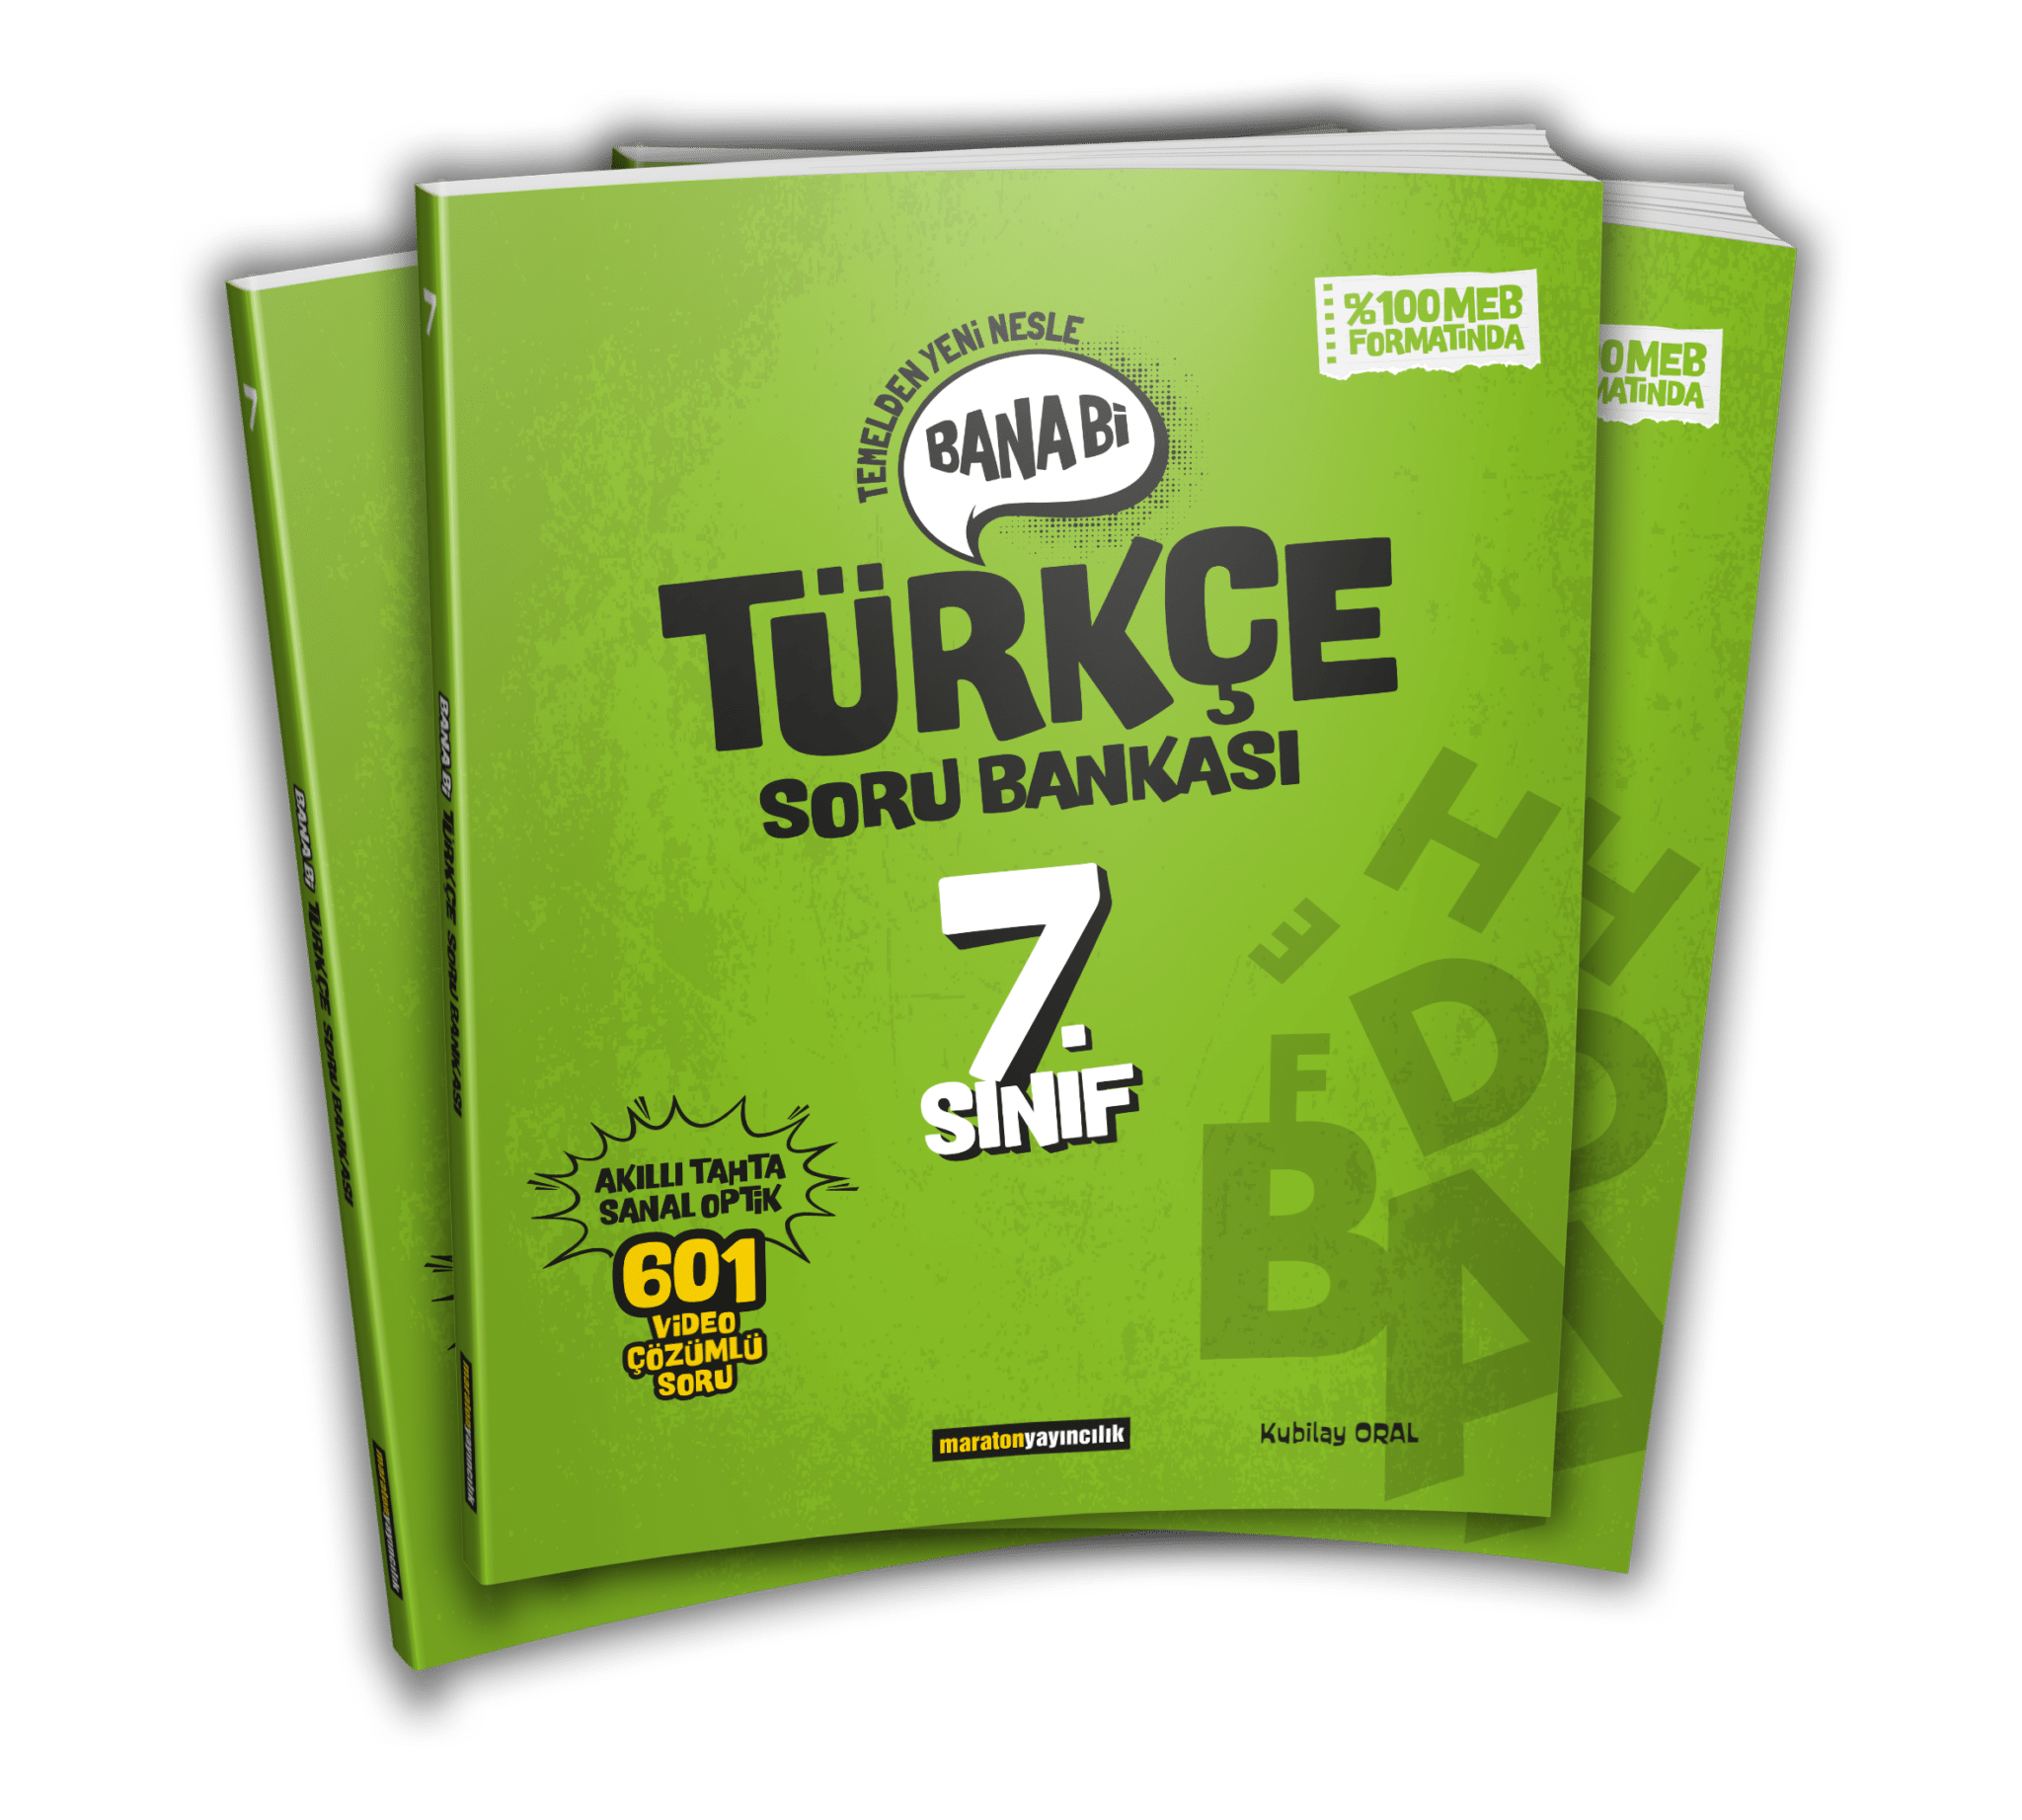 7. Sınıf Bana Bi Türkçe Soru Bankası